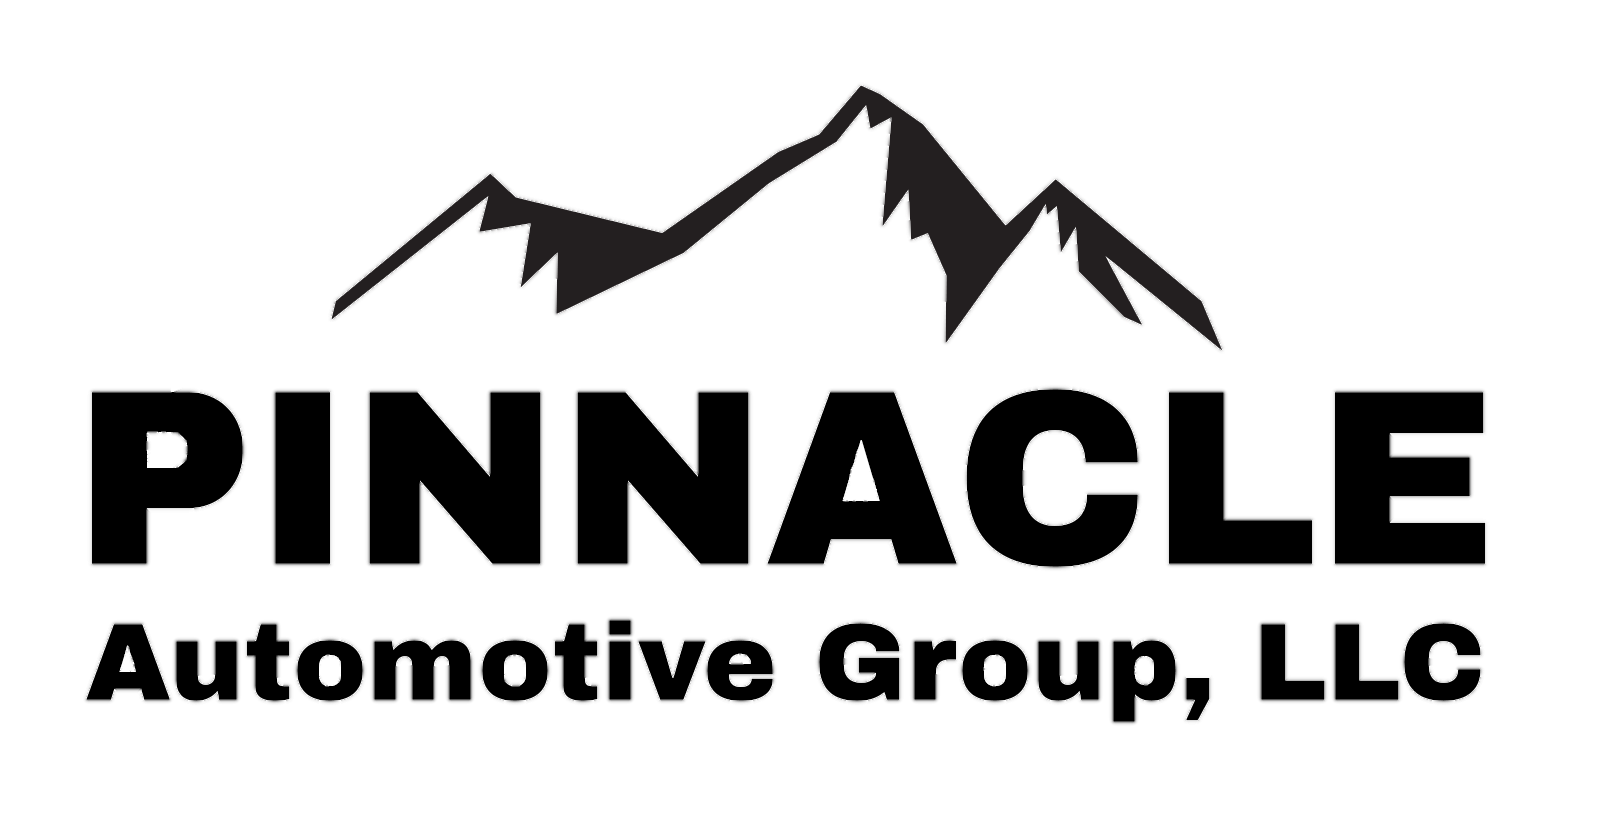 Pinnacle Automotive Group, LLC